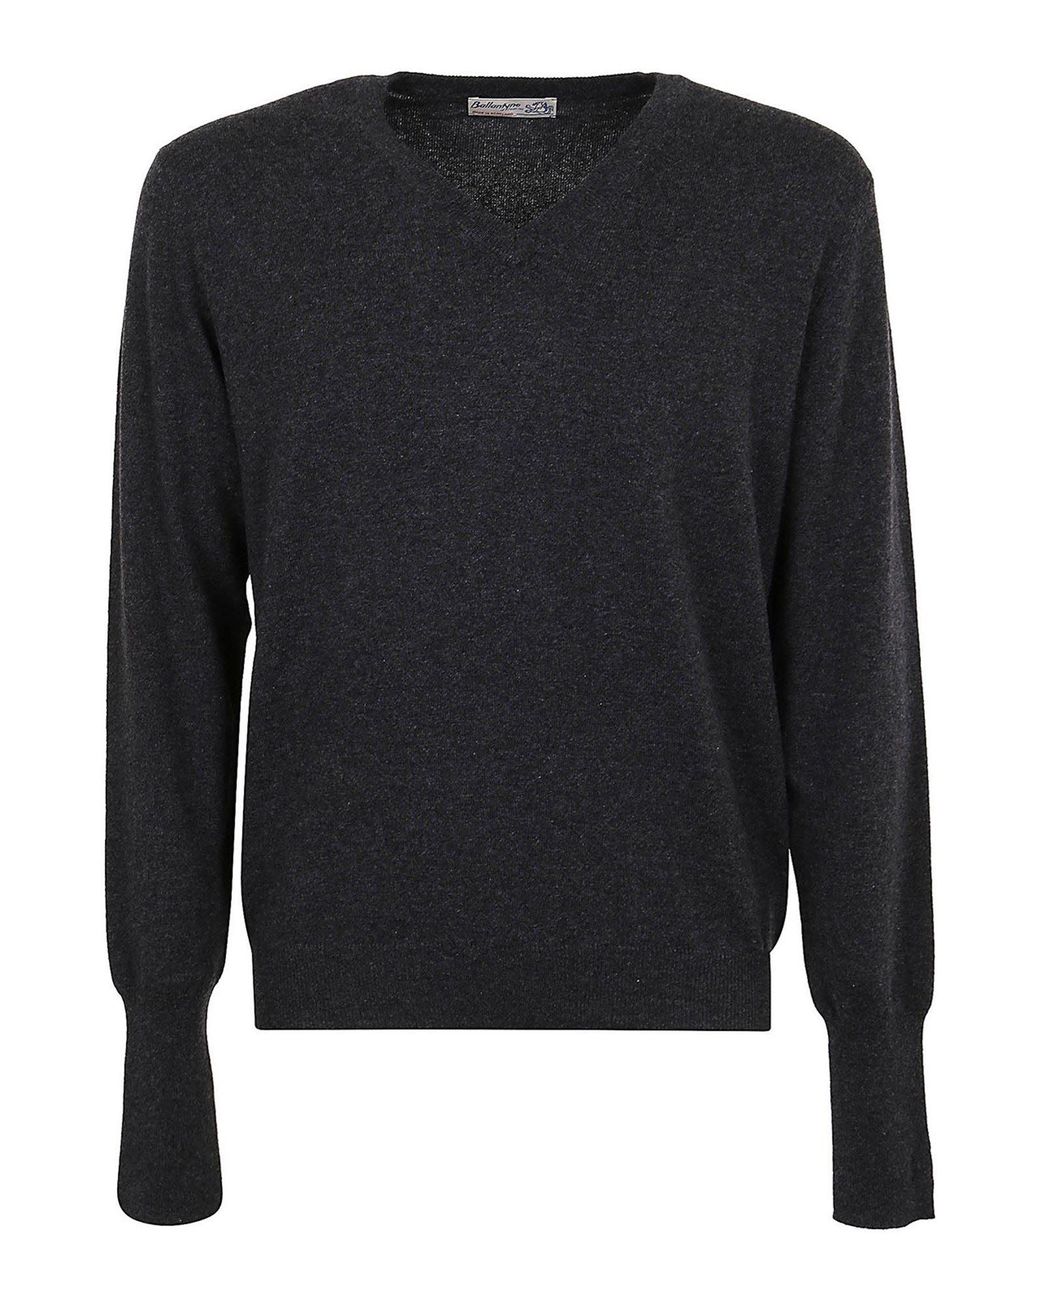 Ballantyne Cashmere V-neck Sweater in Grey (Gray) for Men - Lyst